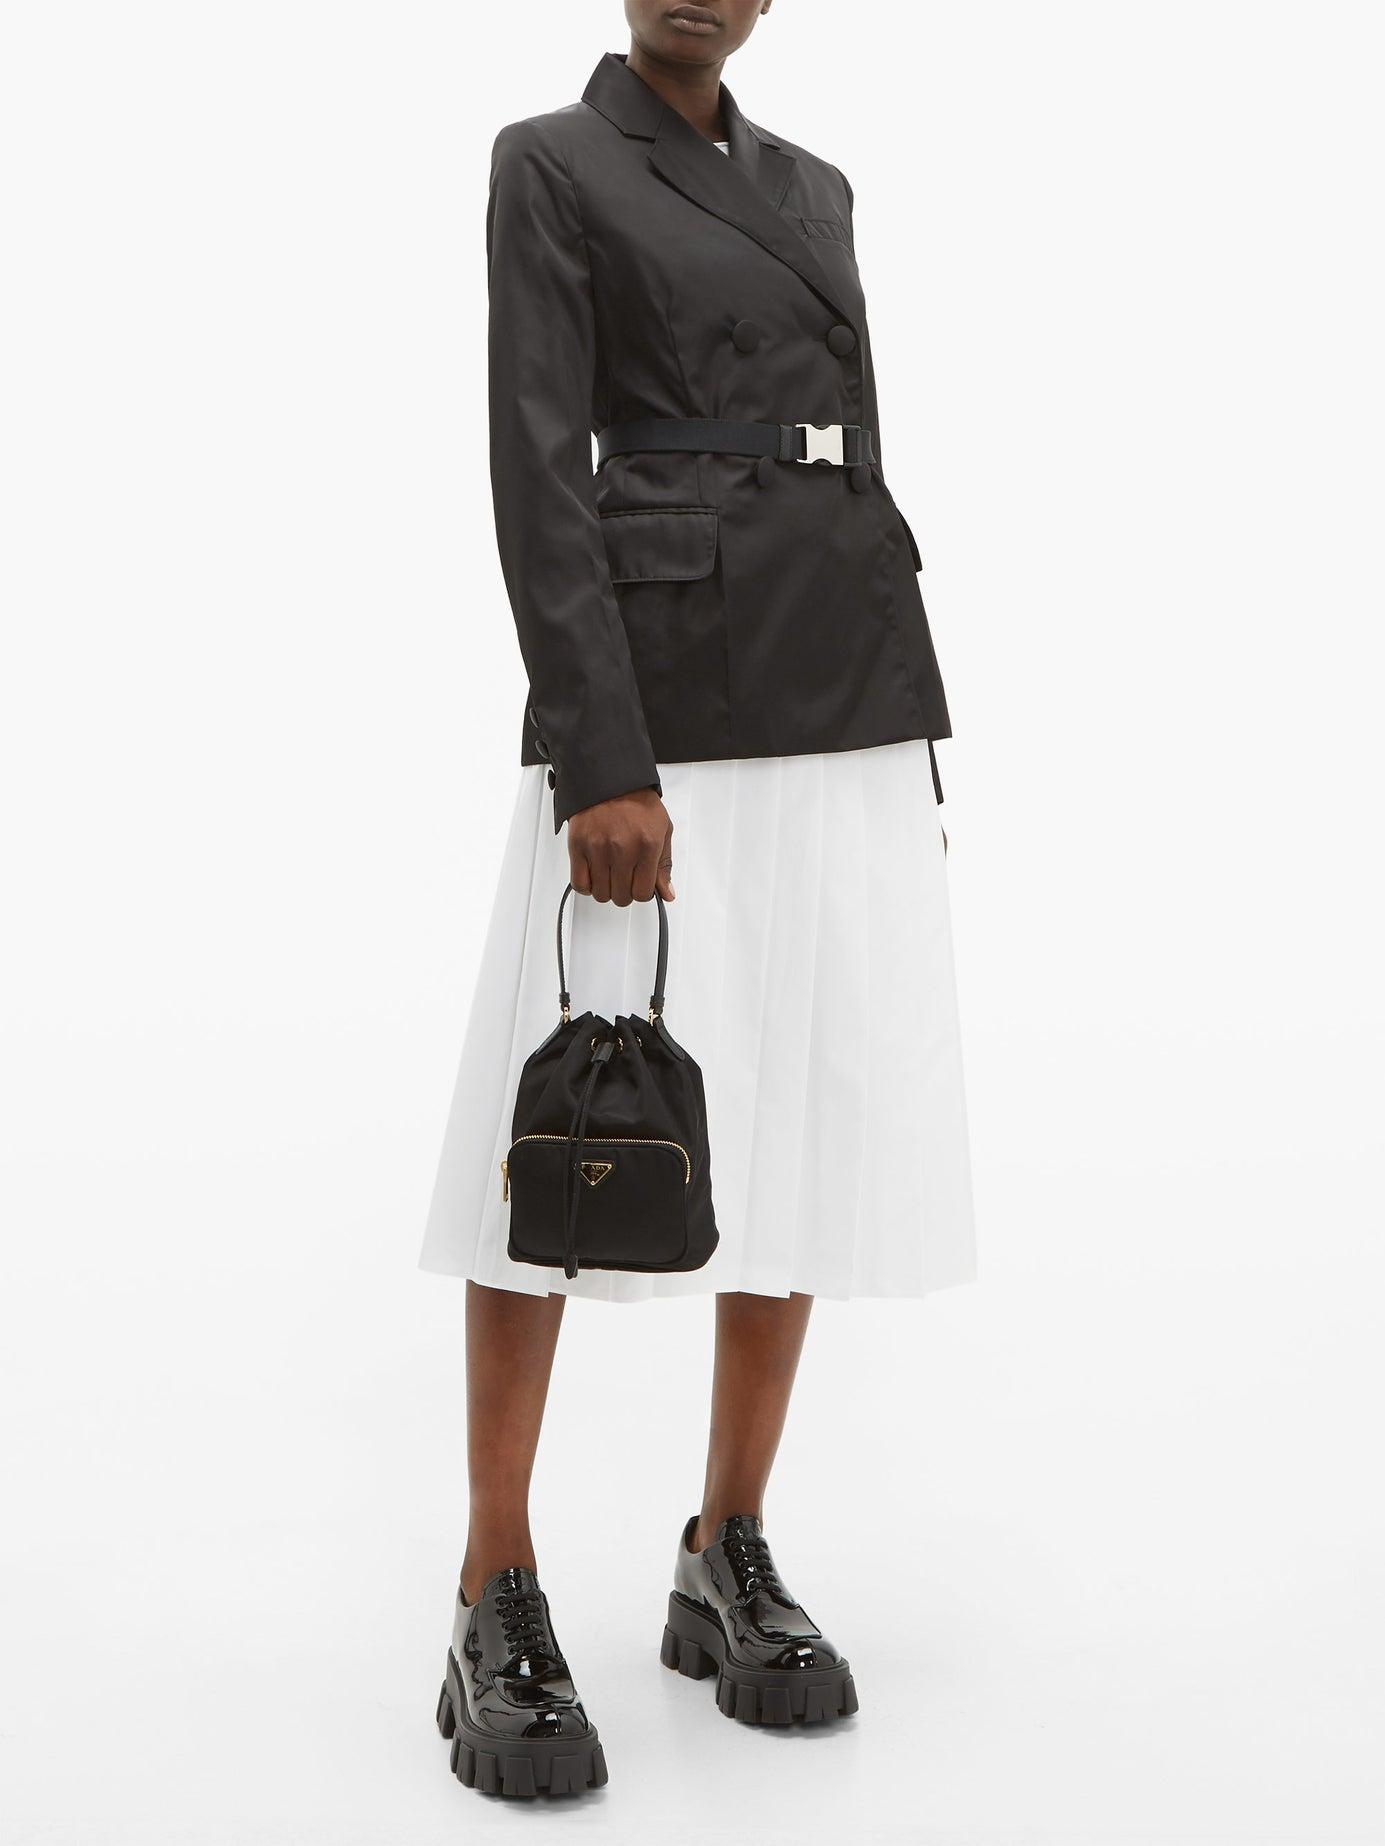 Prada Nylon And Leather Bucket Bag in Black - Lyst